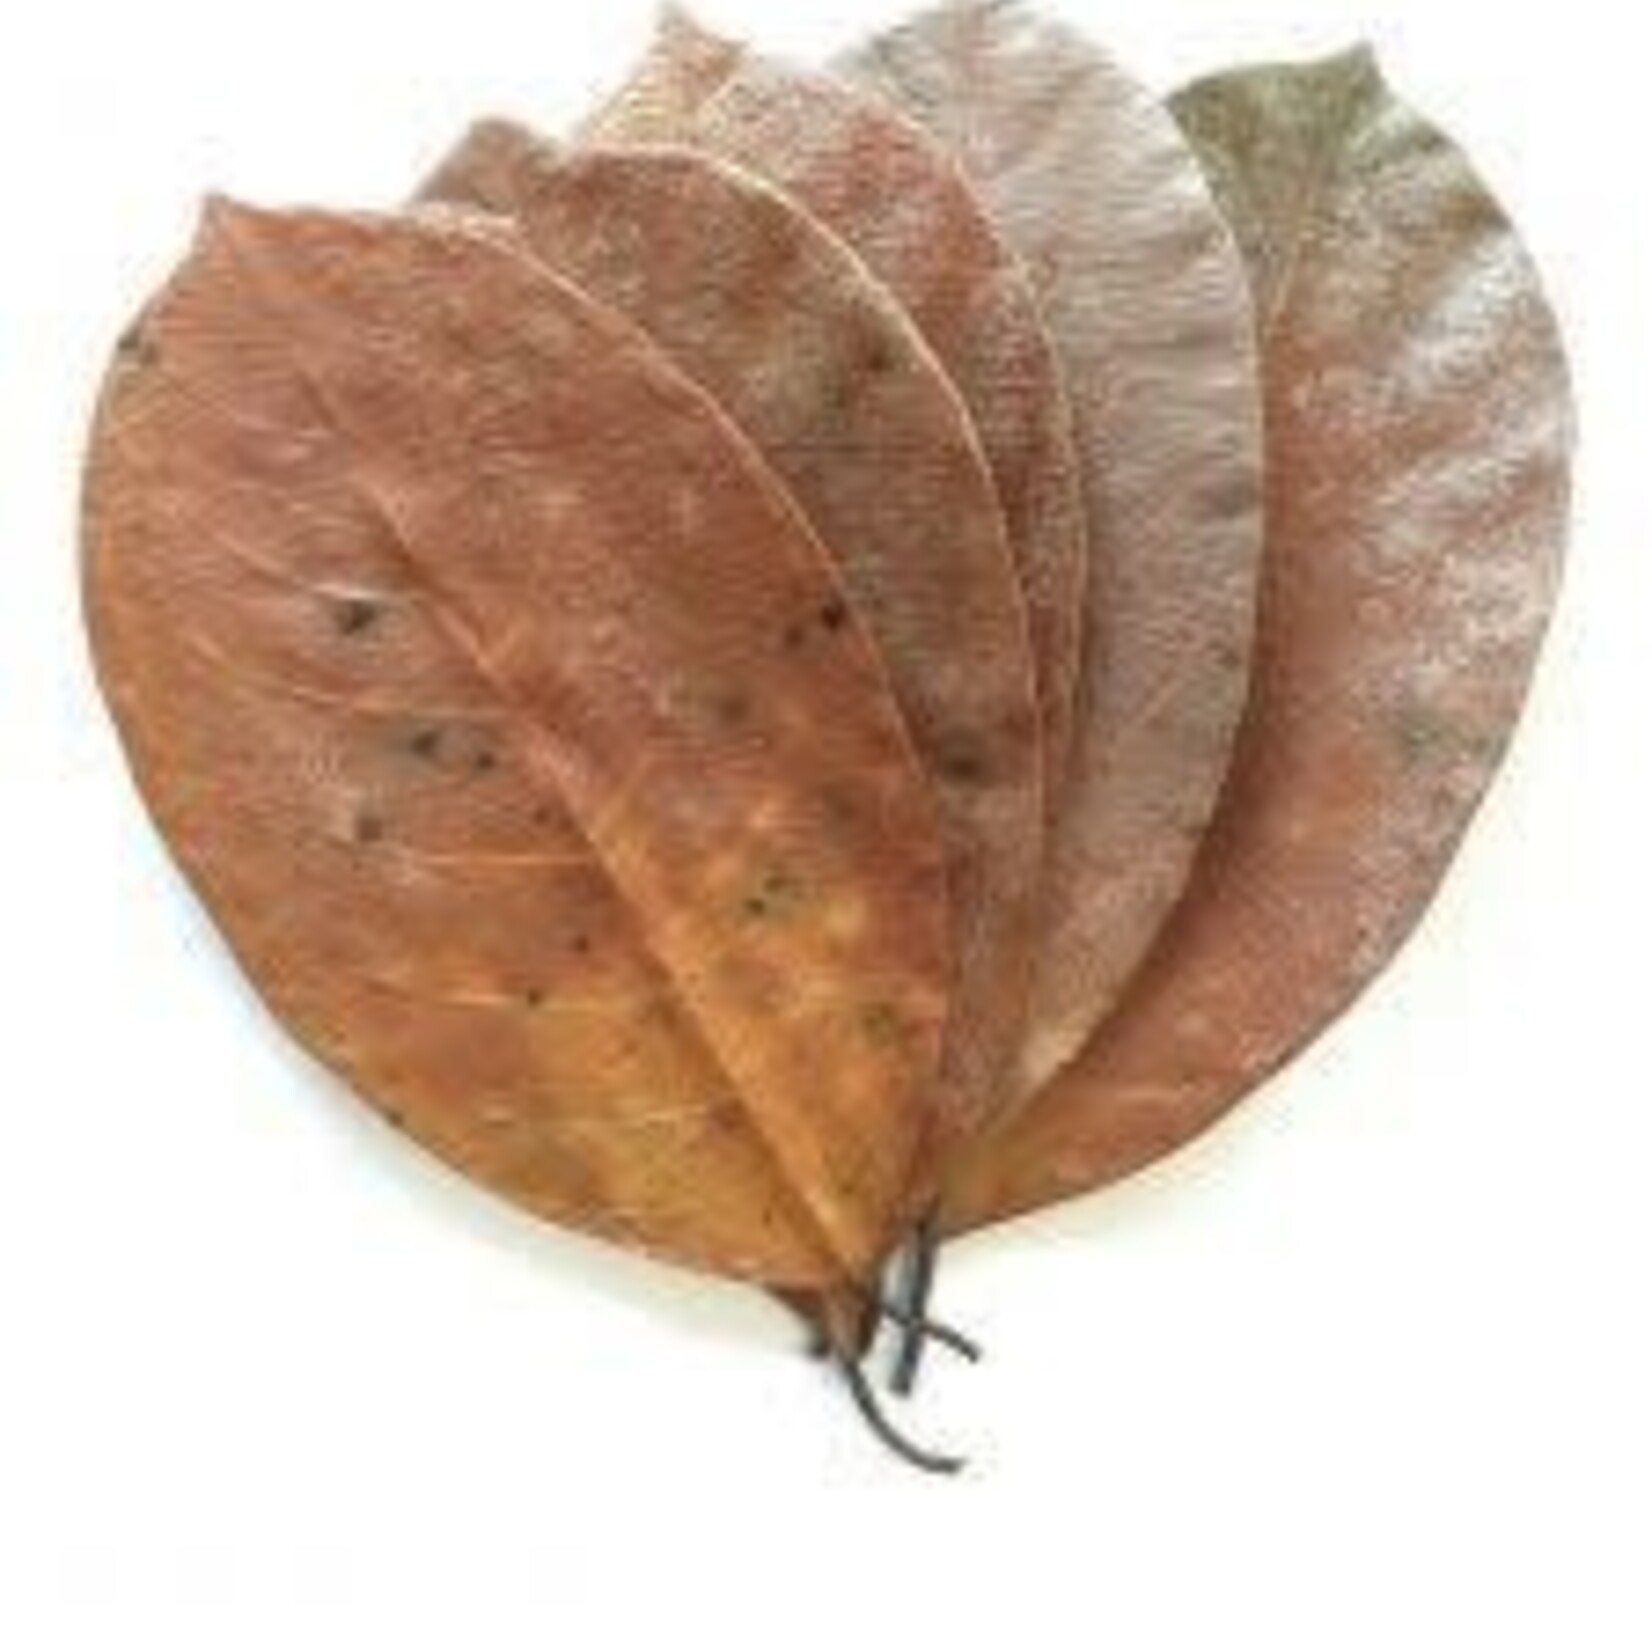 NewCal Pet Jackfruit Leaves